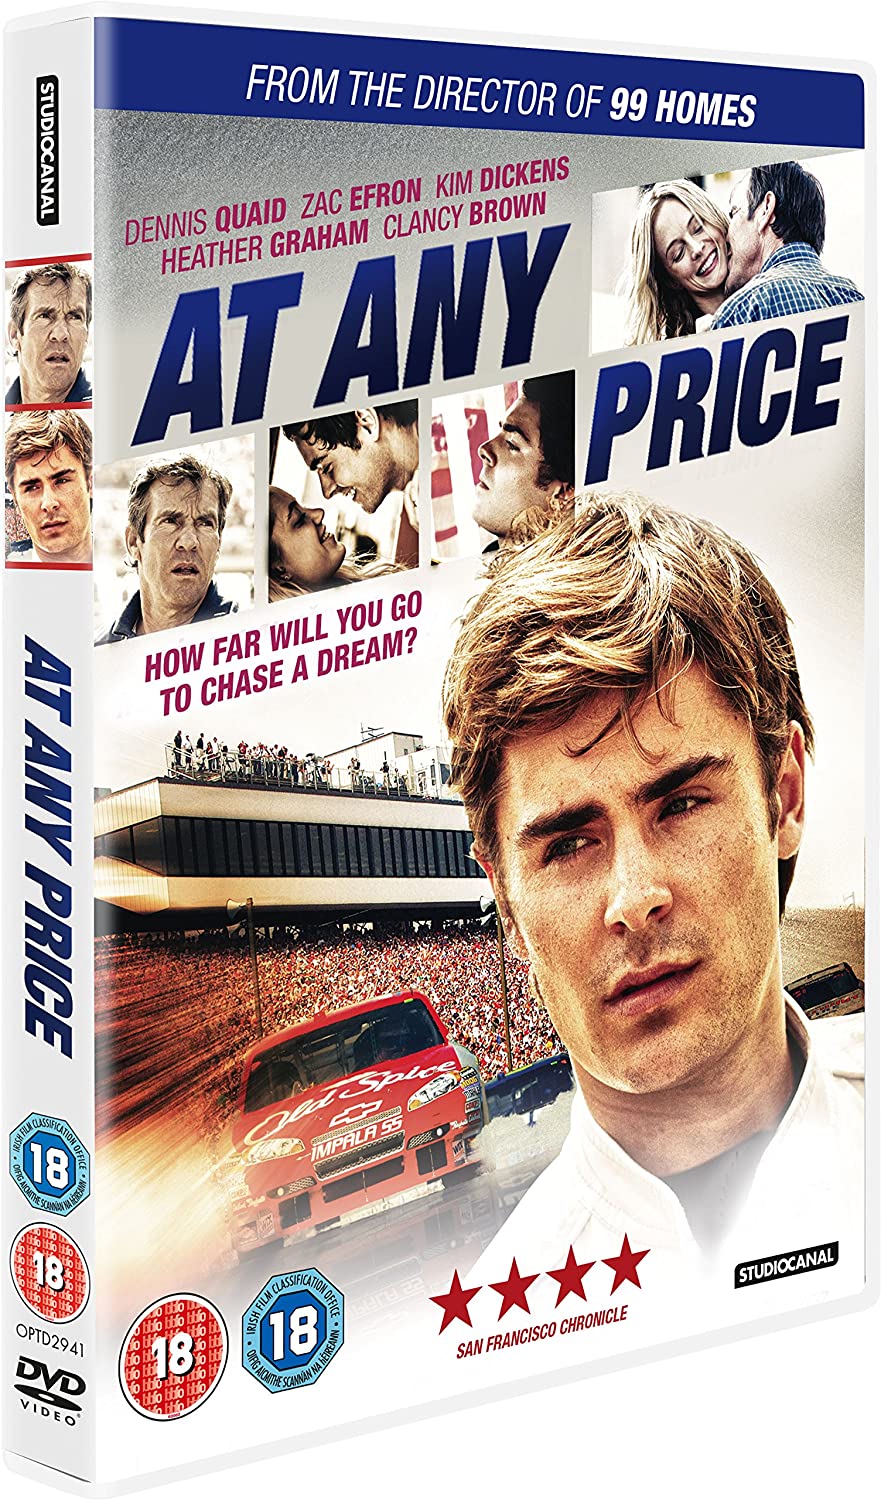 At Any Price - Drama/Thriller [DVD]